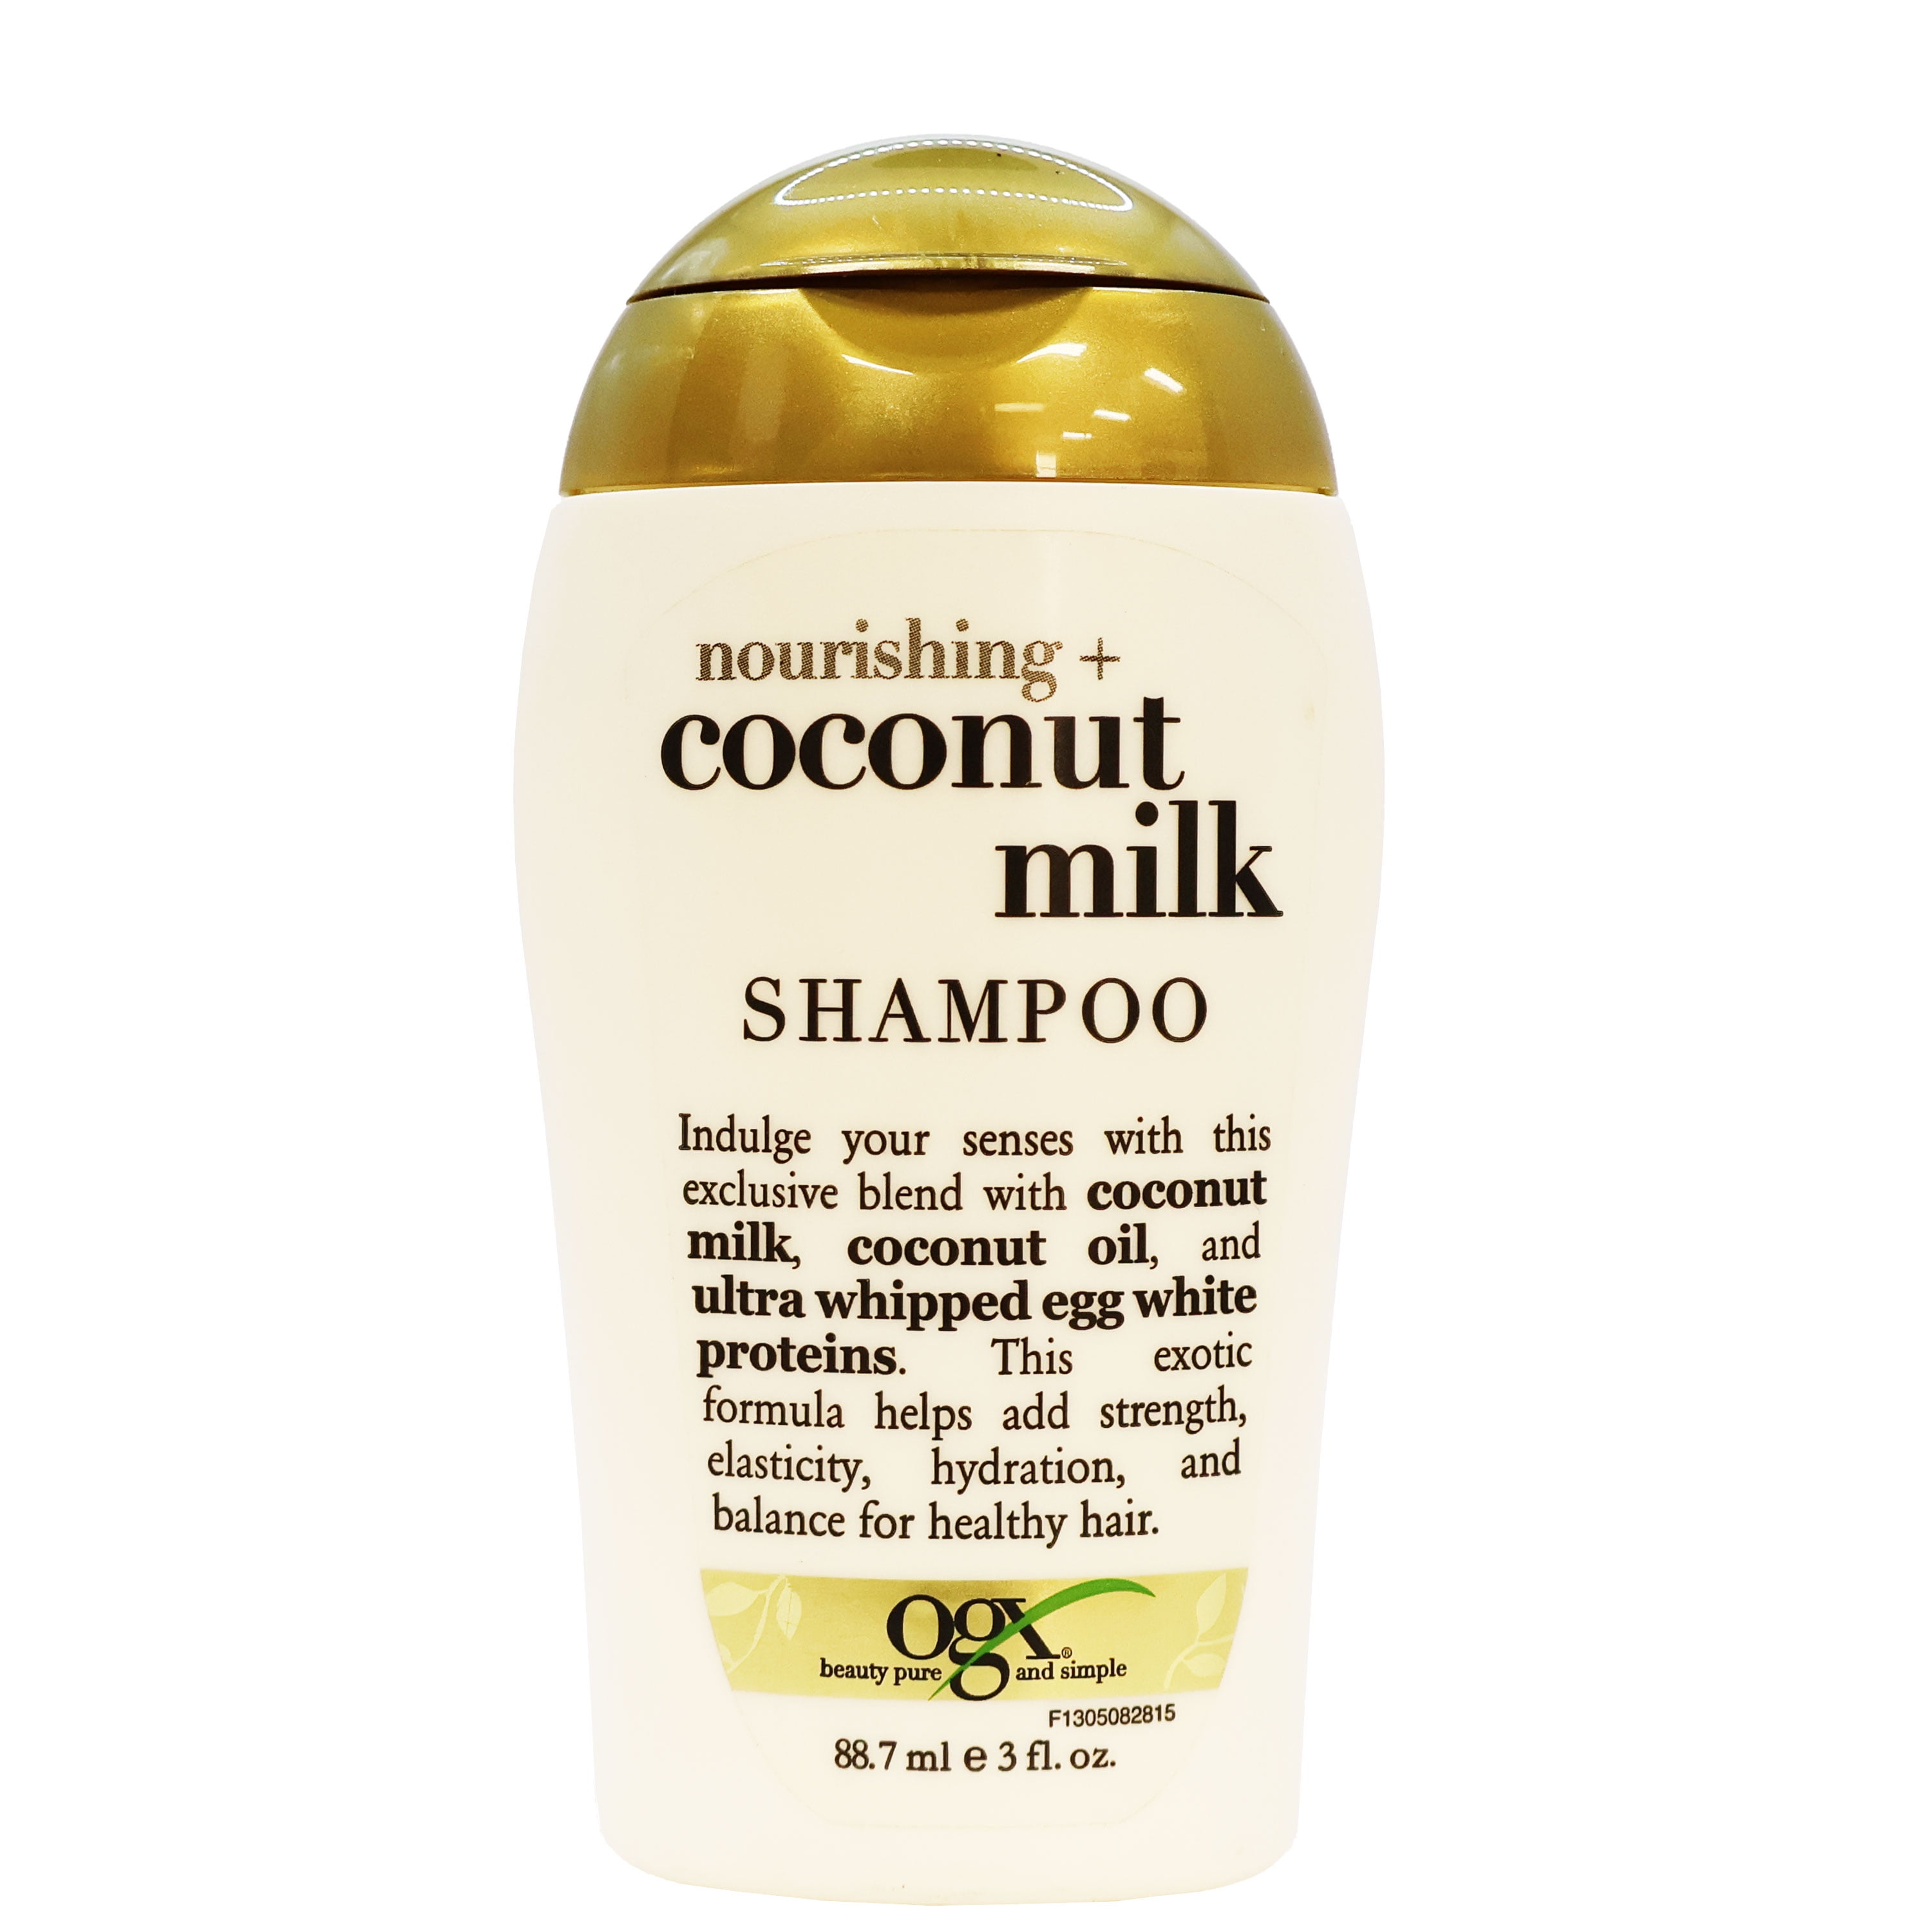 Ogx Coconut Milk Shampoo 3 Oz., Pack of 6 - Walmart.com